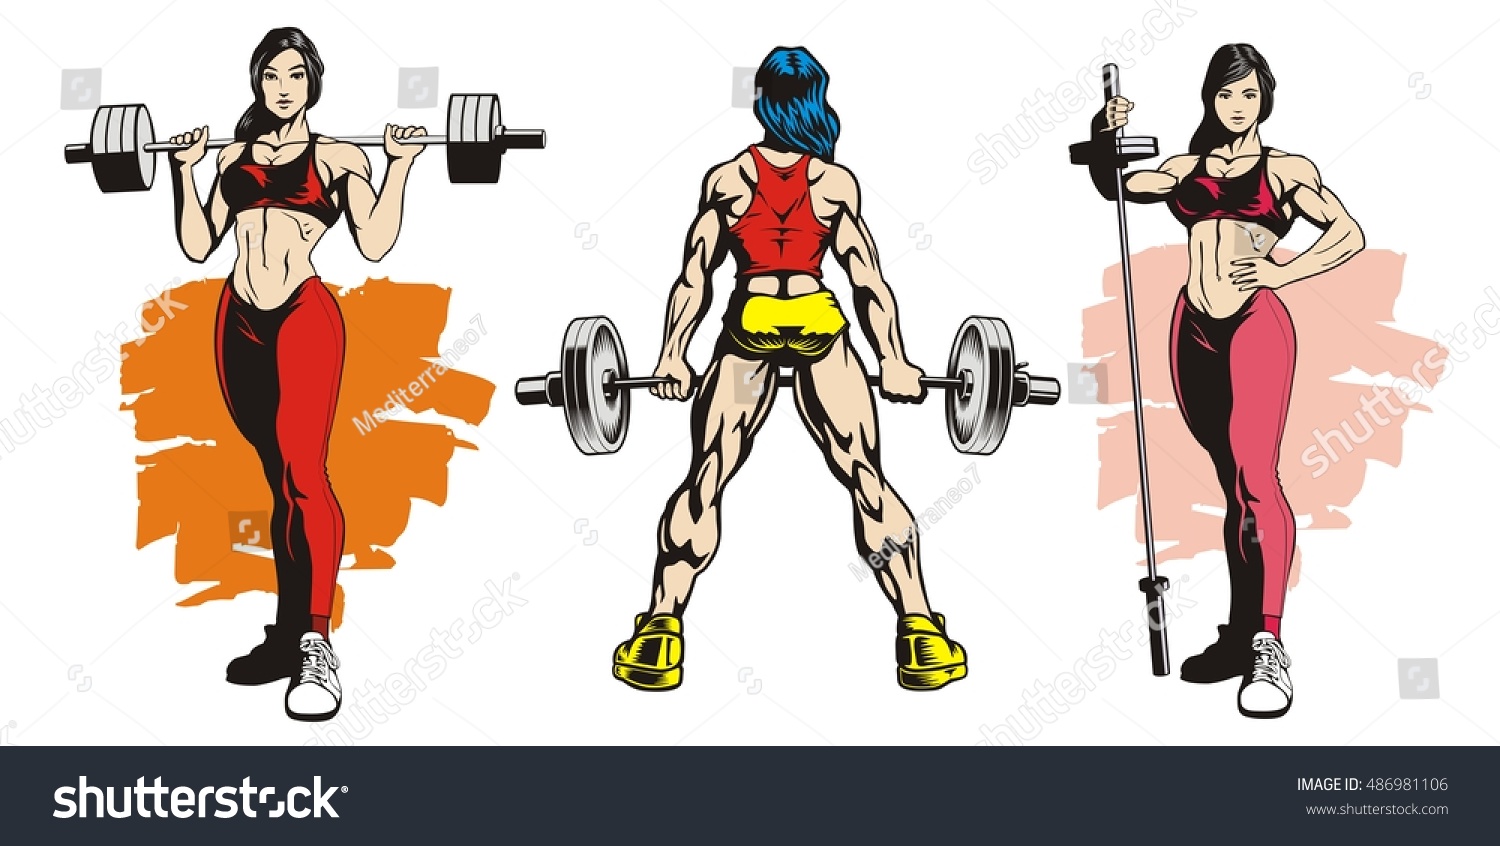 Fitness Women Bodybuilders Vector Illustration เวกเตอร์สต็อก ปลอดค่าลิขสิทธิ์ 486981106